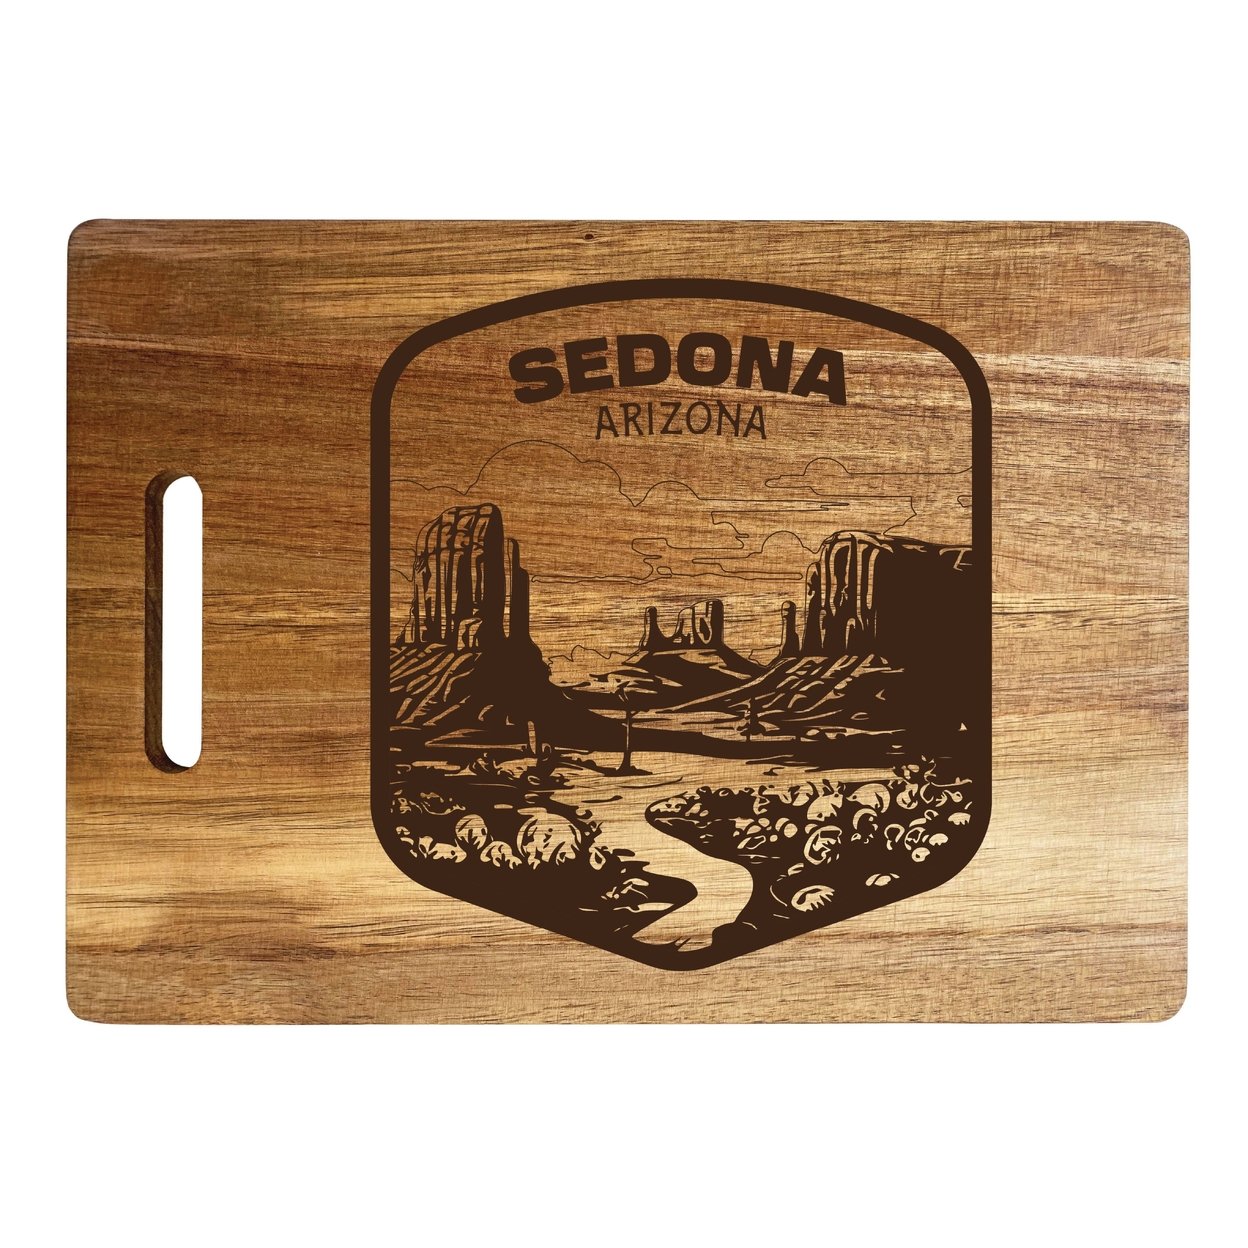 Sedona Arizona Souvenir Wooden Cutting Board 10 X 14